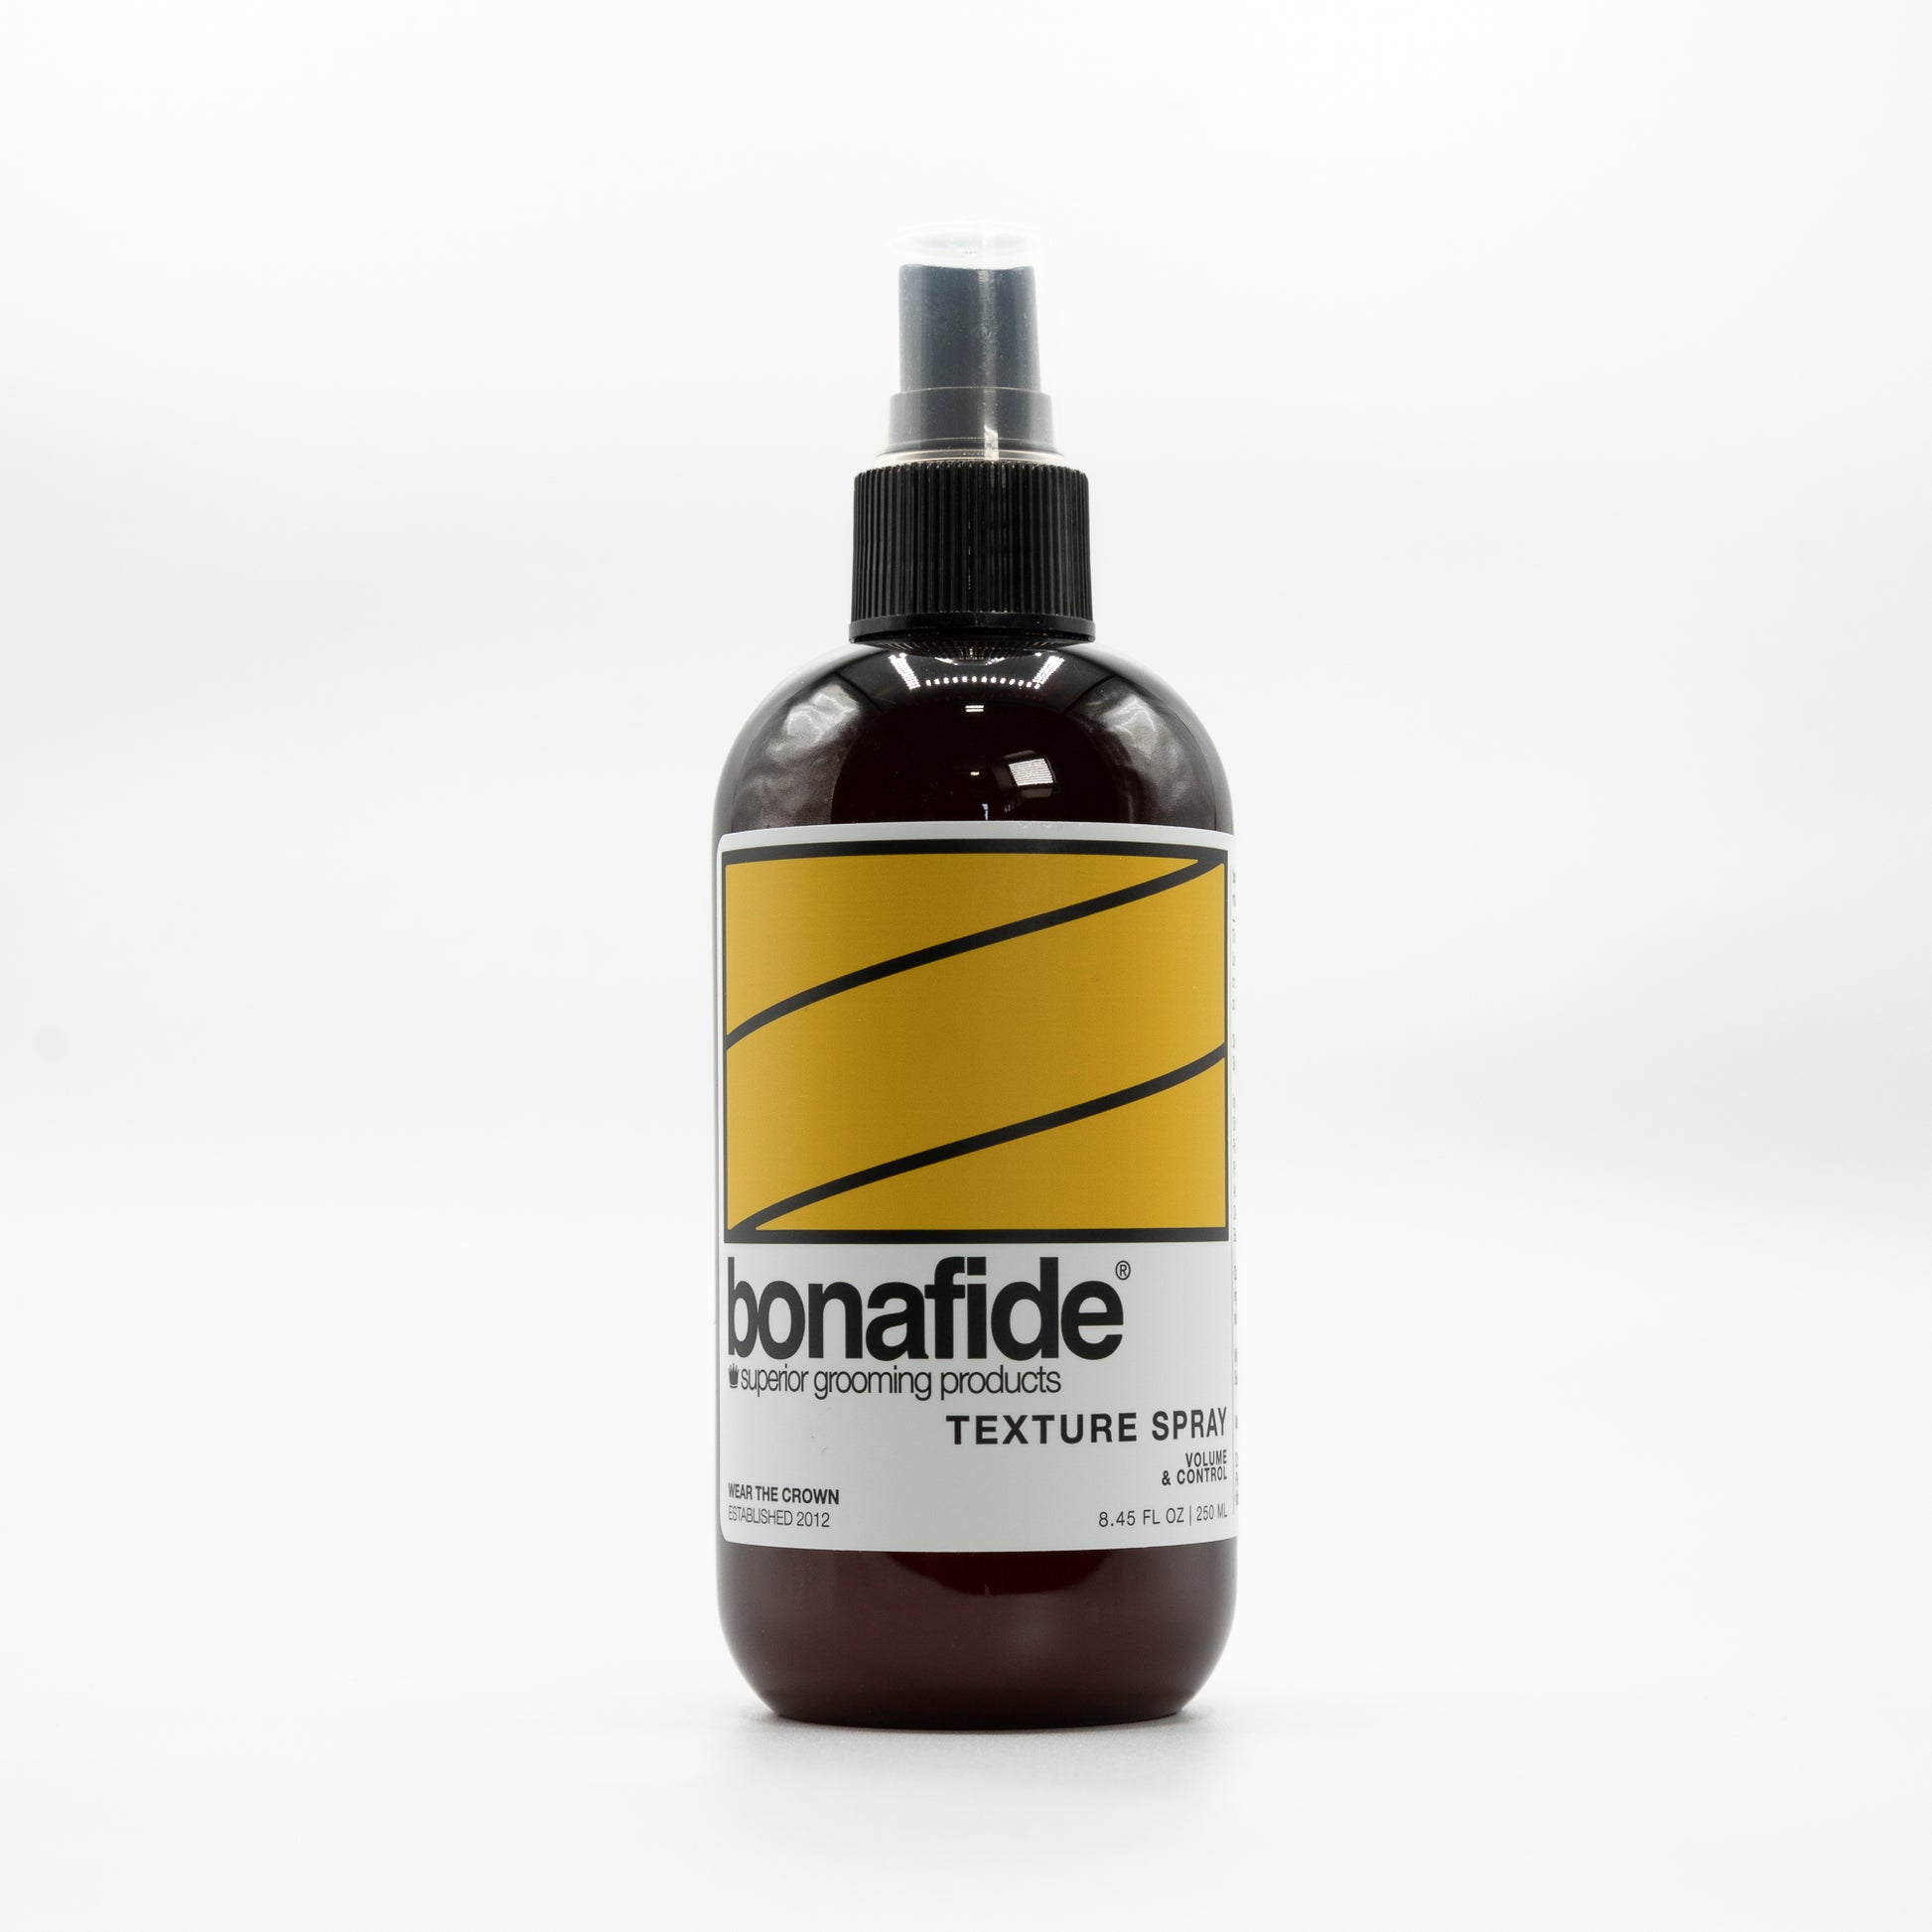 Texture Spray – Bona Fide Pomade, Inc.